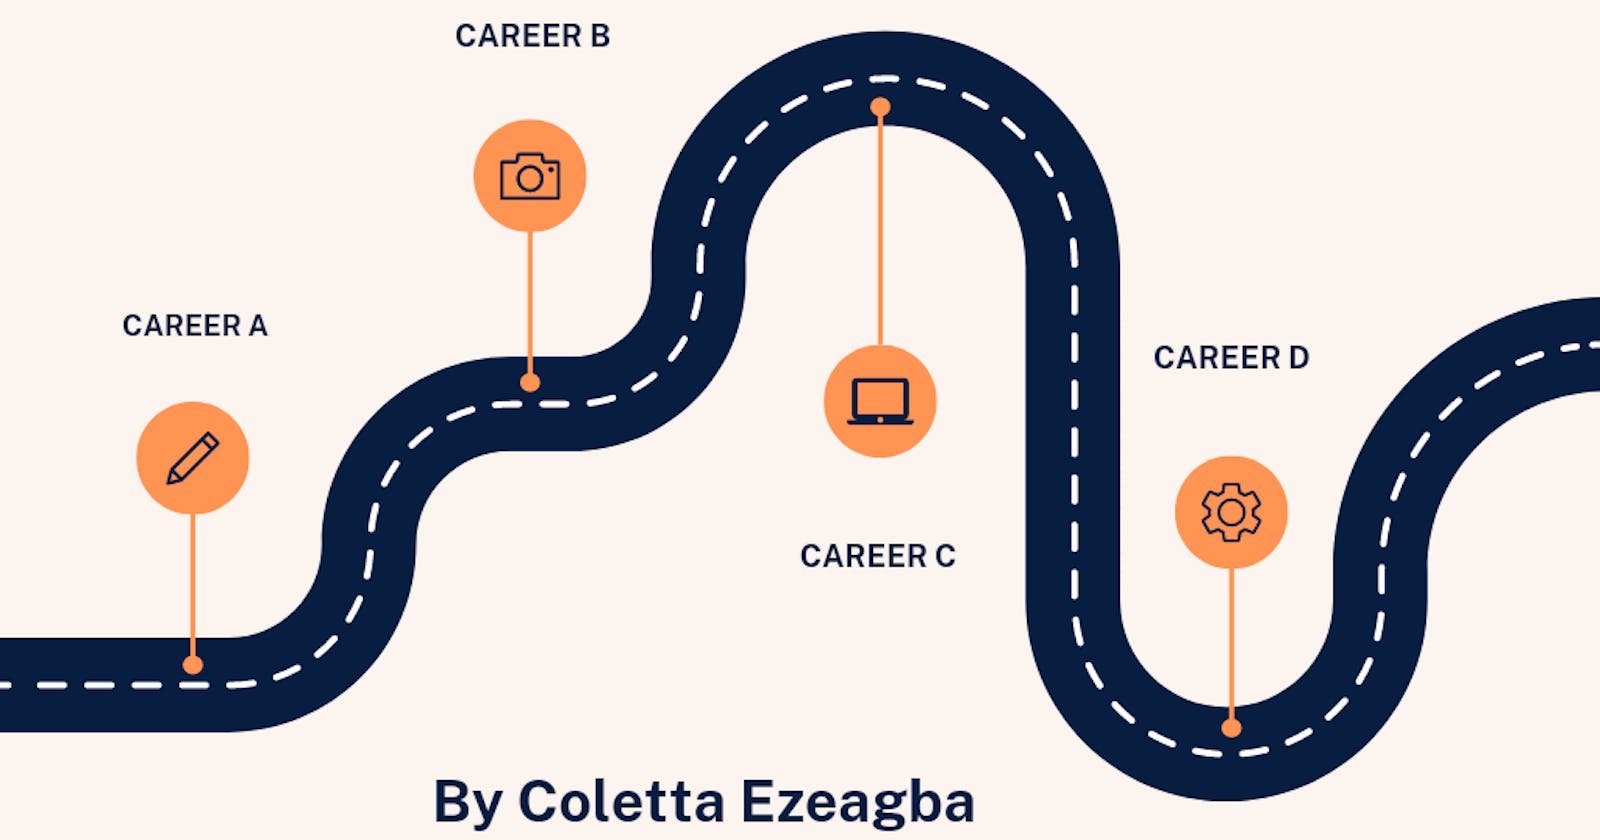 Designing A Tech Career Roadmap